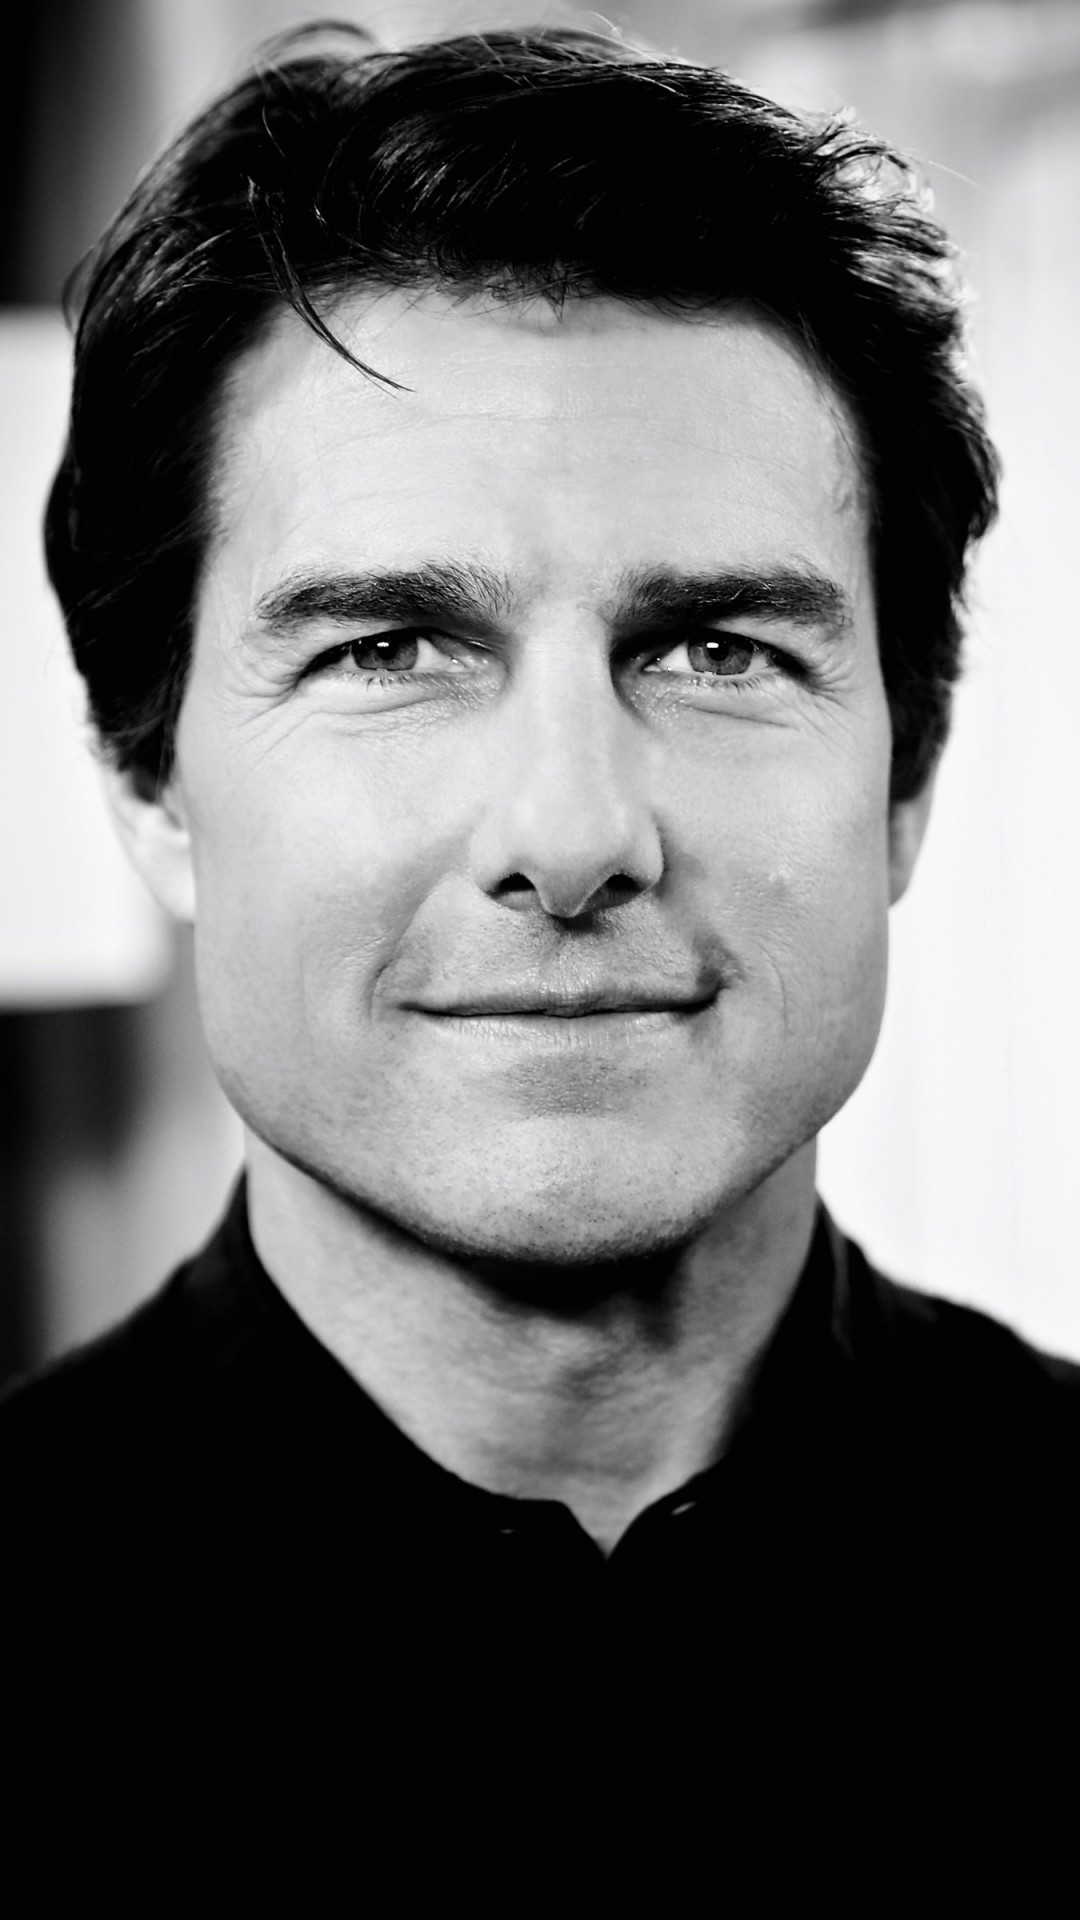 Tom Cruise Black & White Portrait Wallpaper for SAMSUNG Galaxy S5